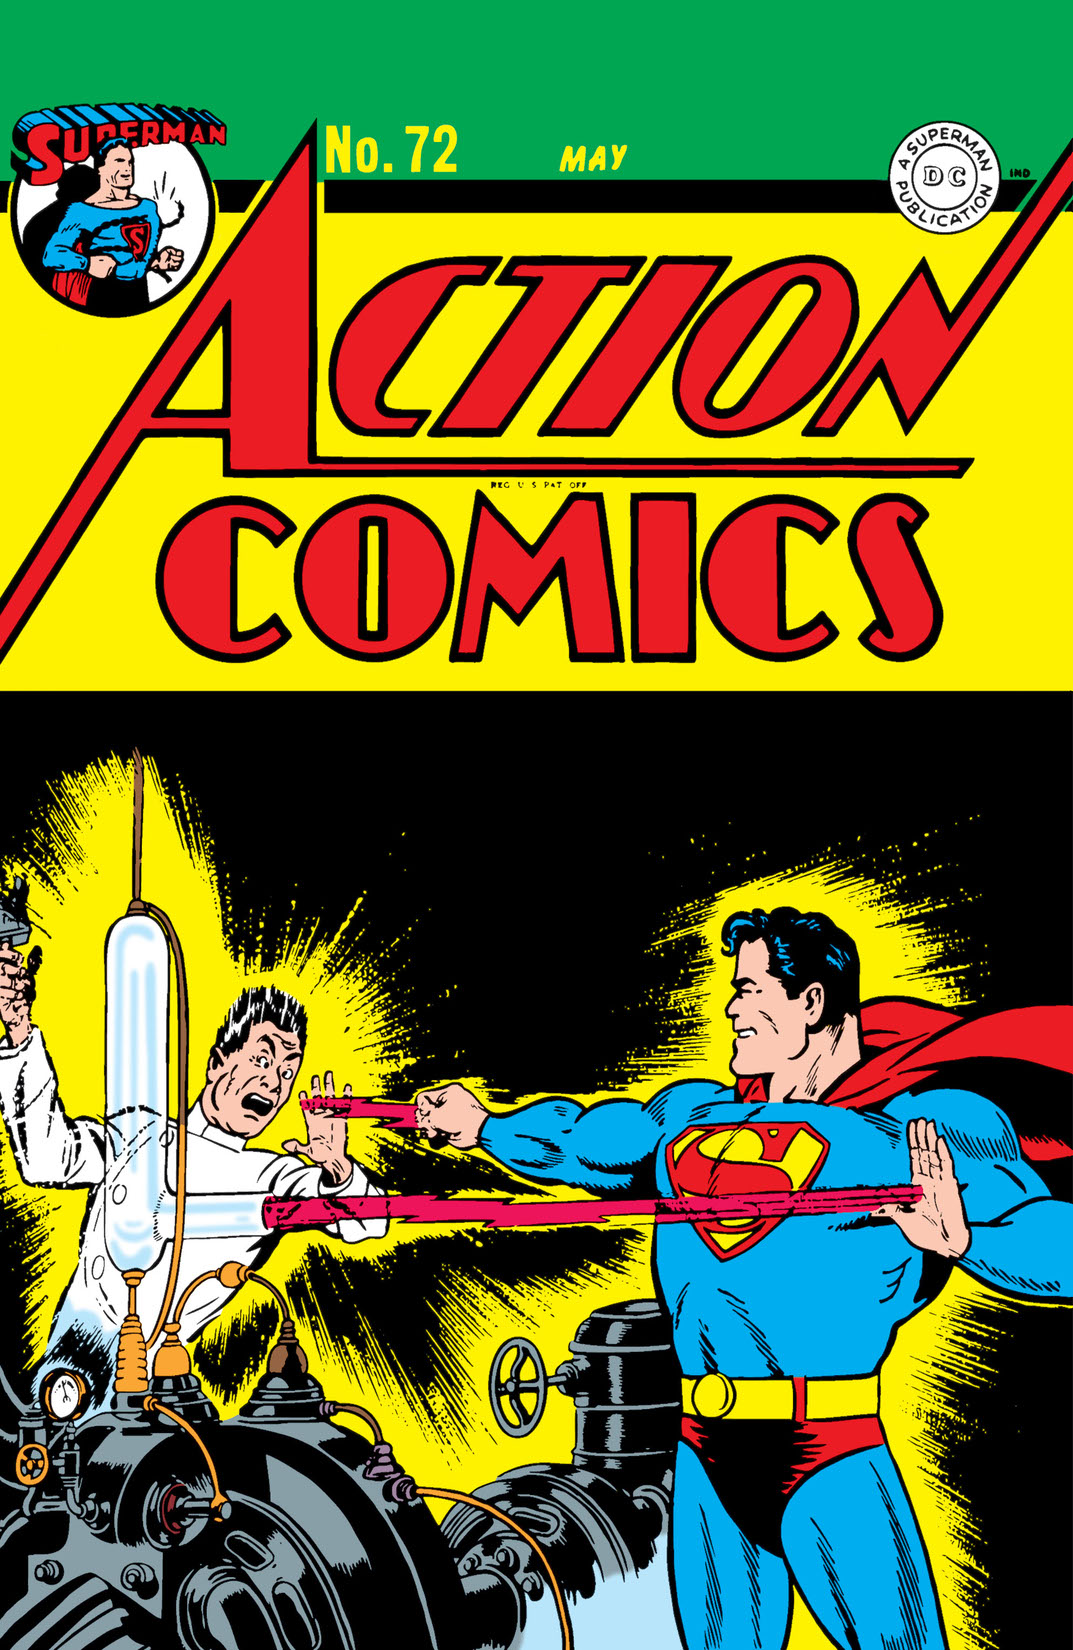 Action Comics (1938-) #72 preview images